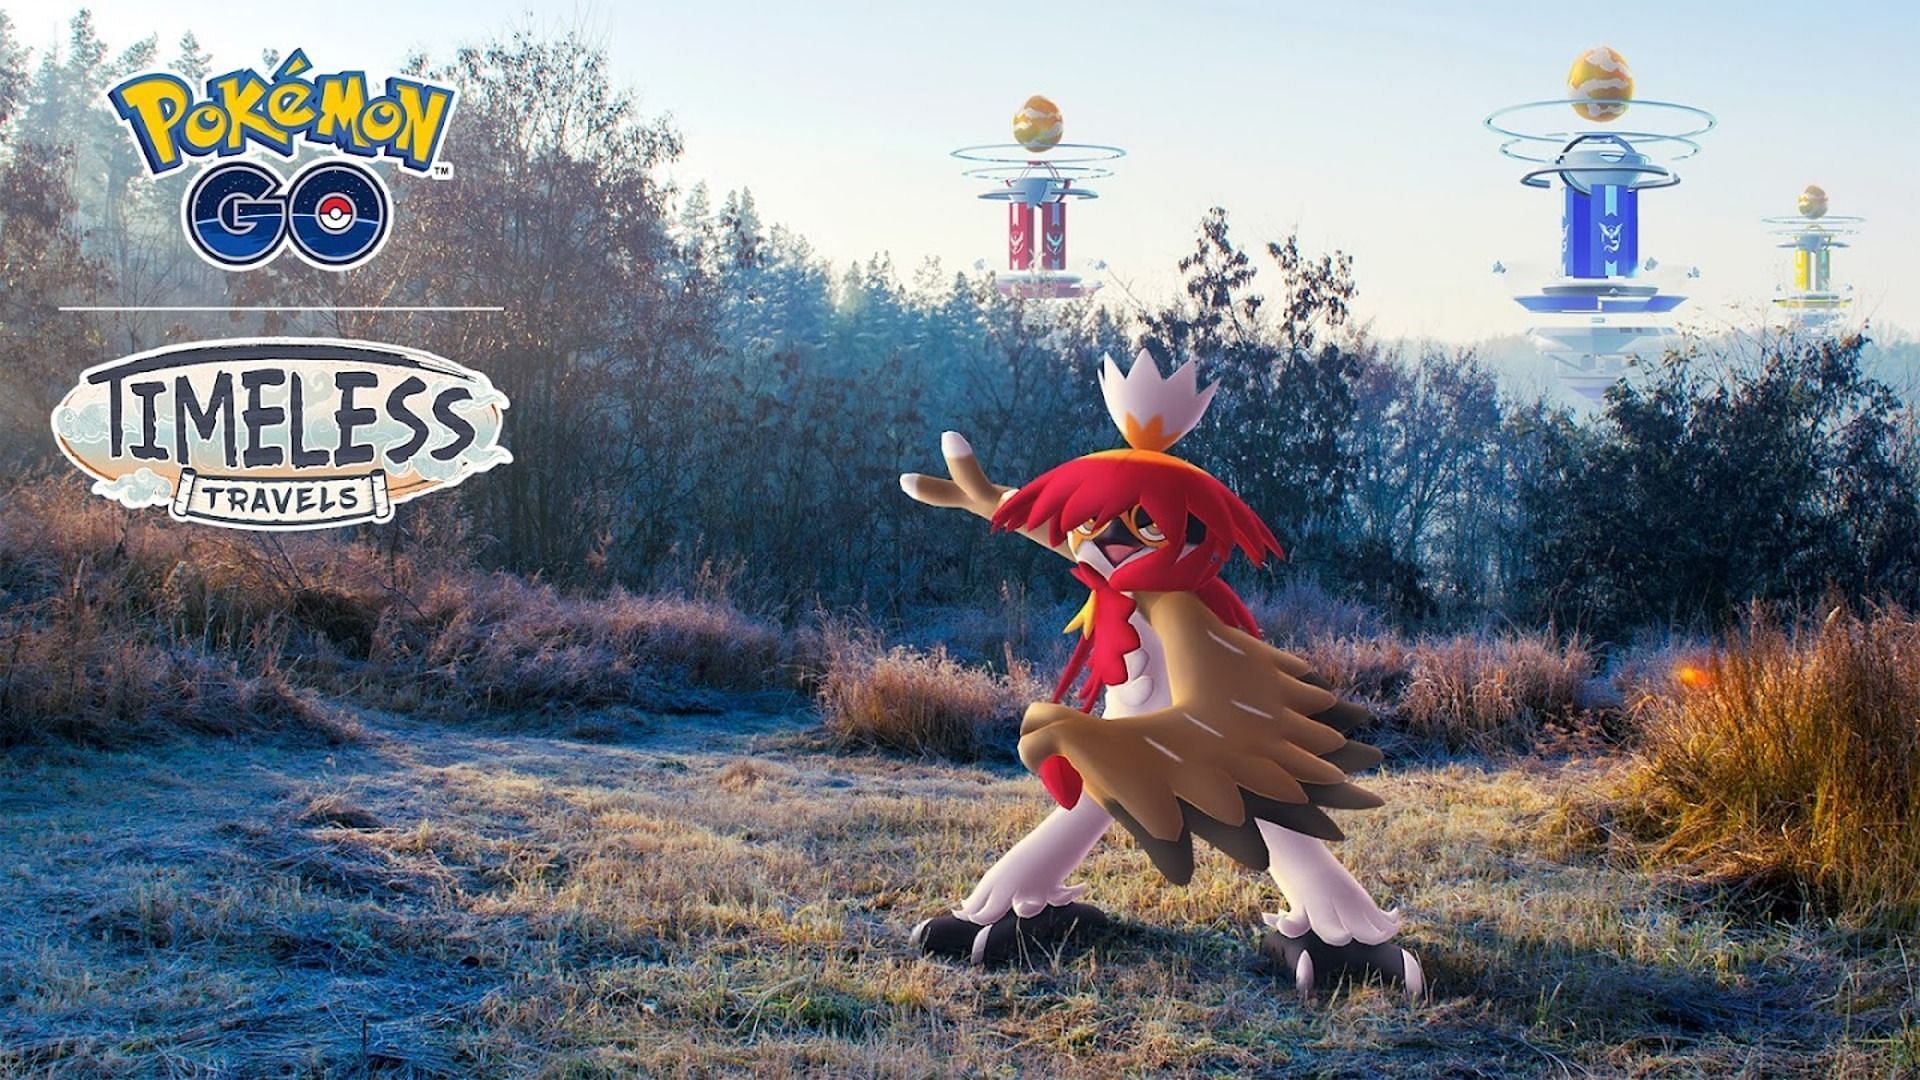 Official artwork for Pokemon GO (Image via Niantic)